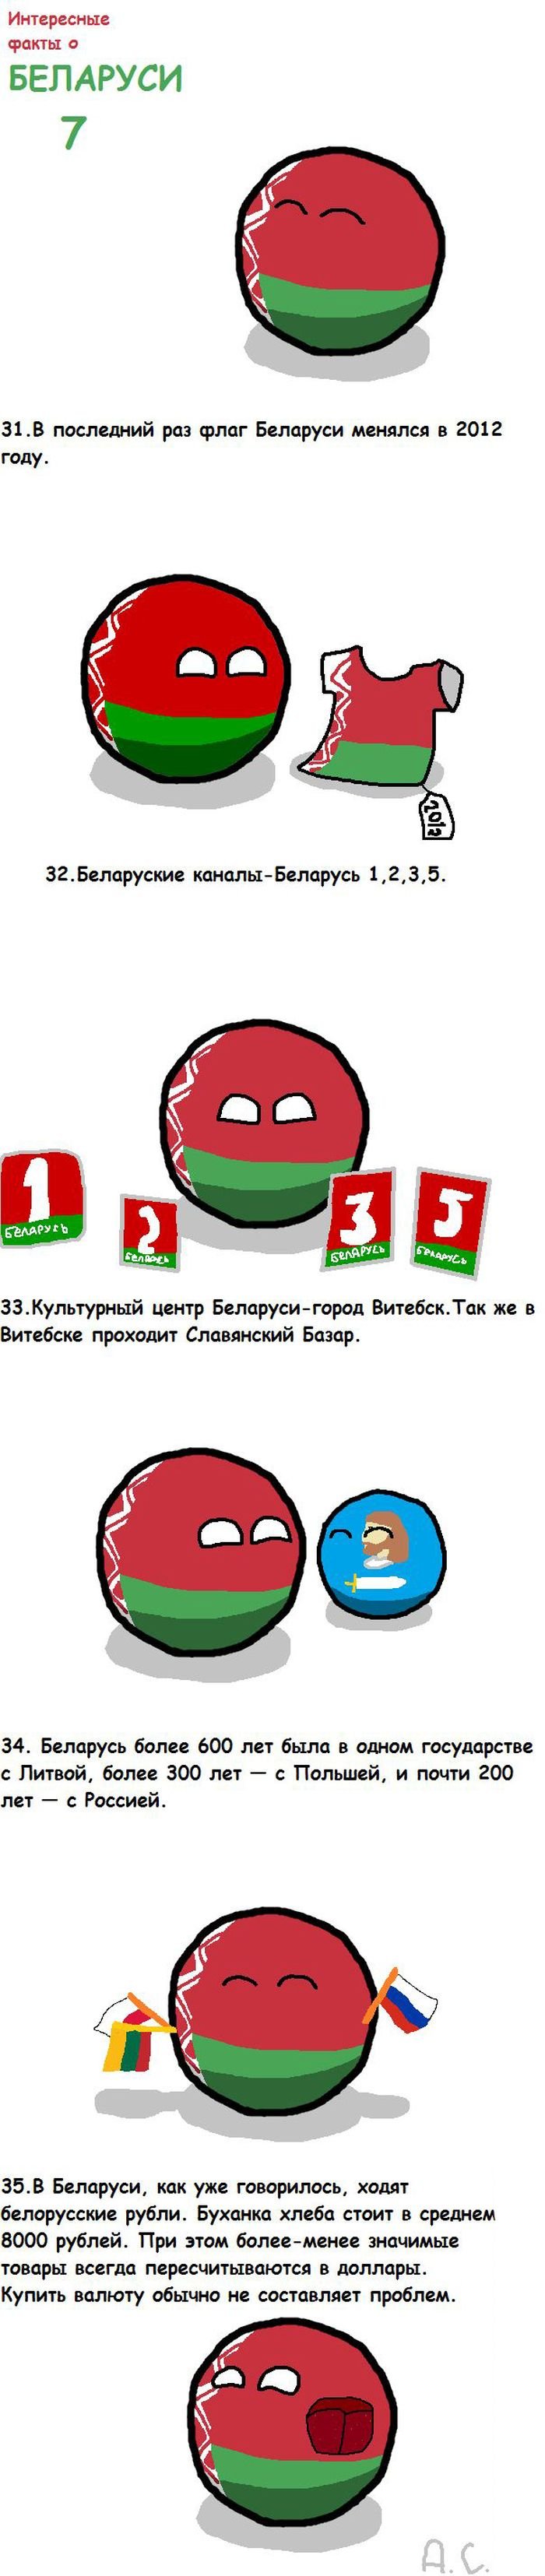 Факты о Белоруссии (8 фото)